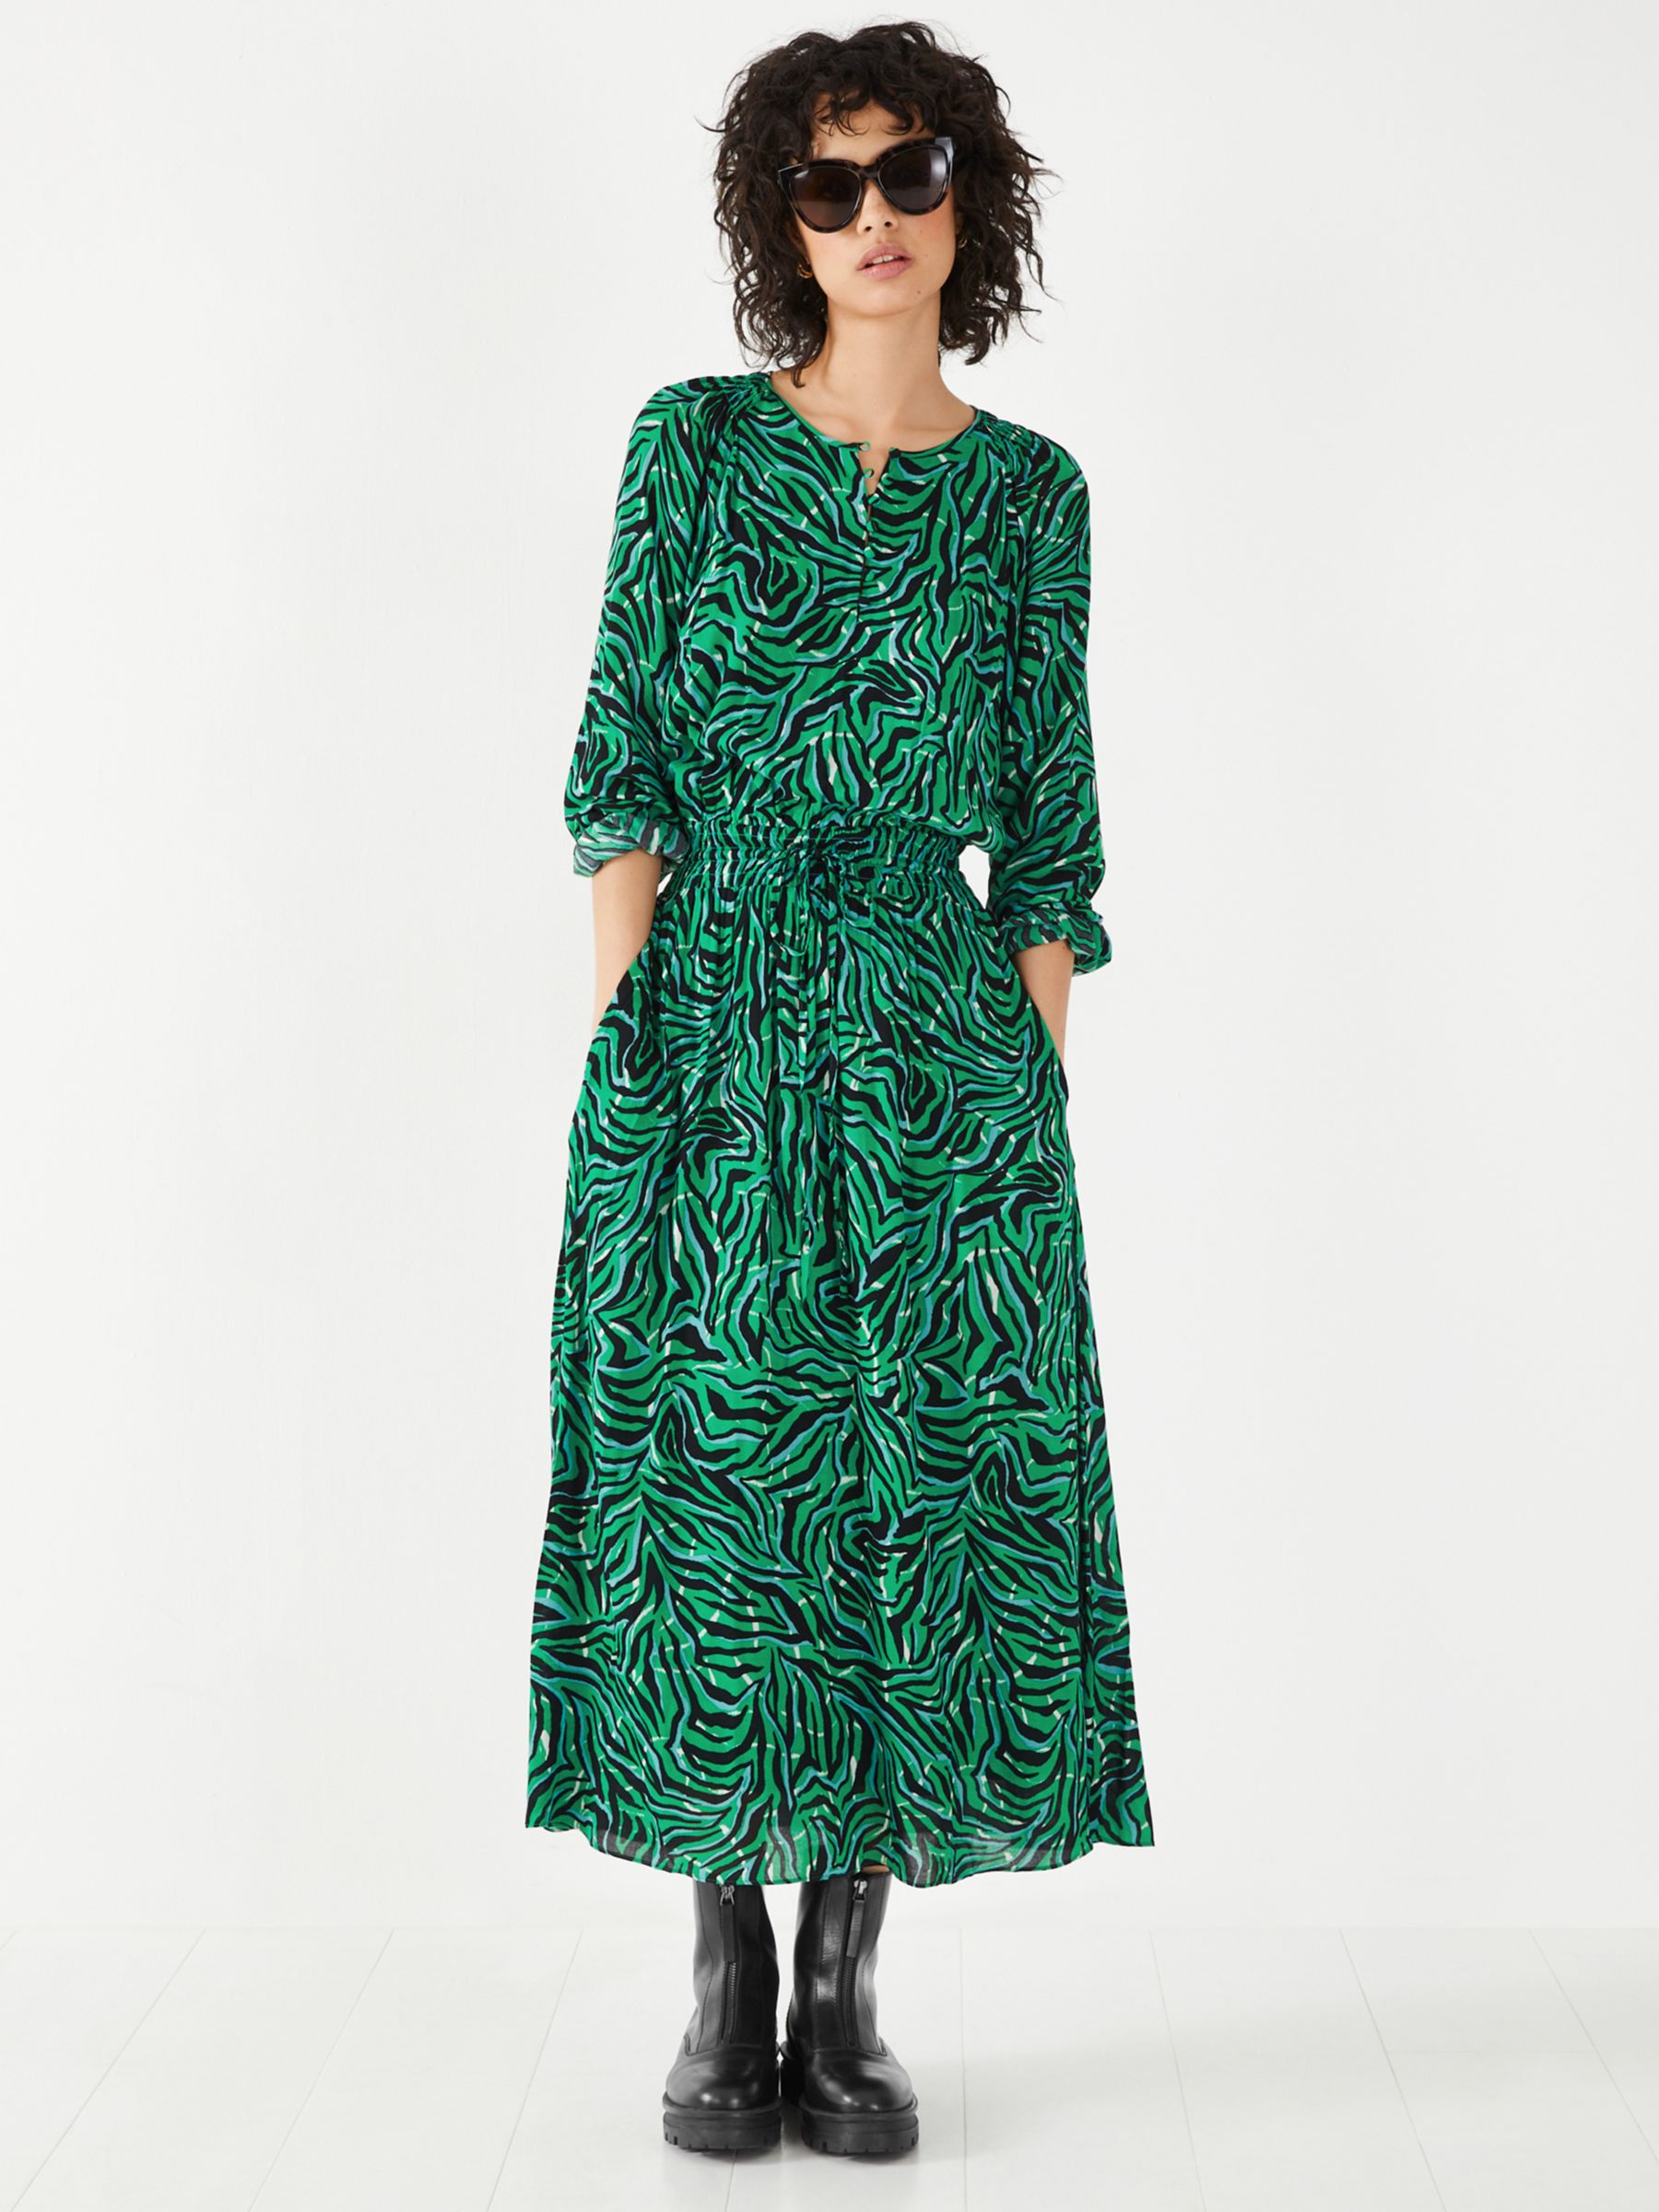 HUSH Madelyn Animal Print Midi Dress, Green at John Lewis & Partners